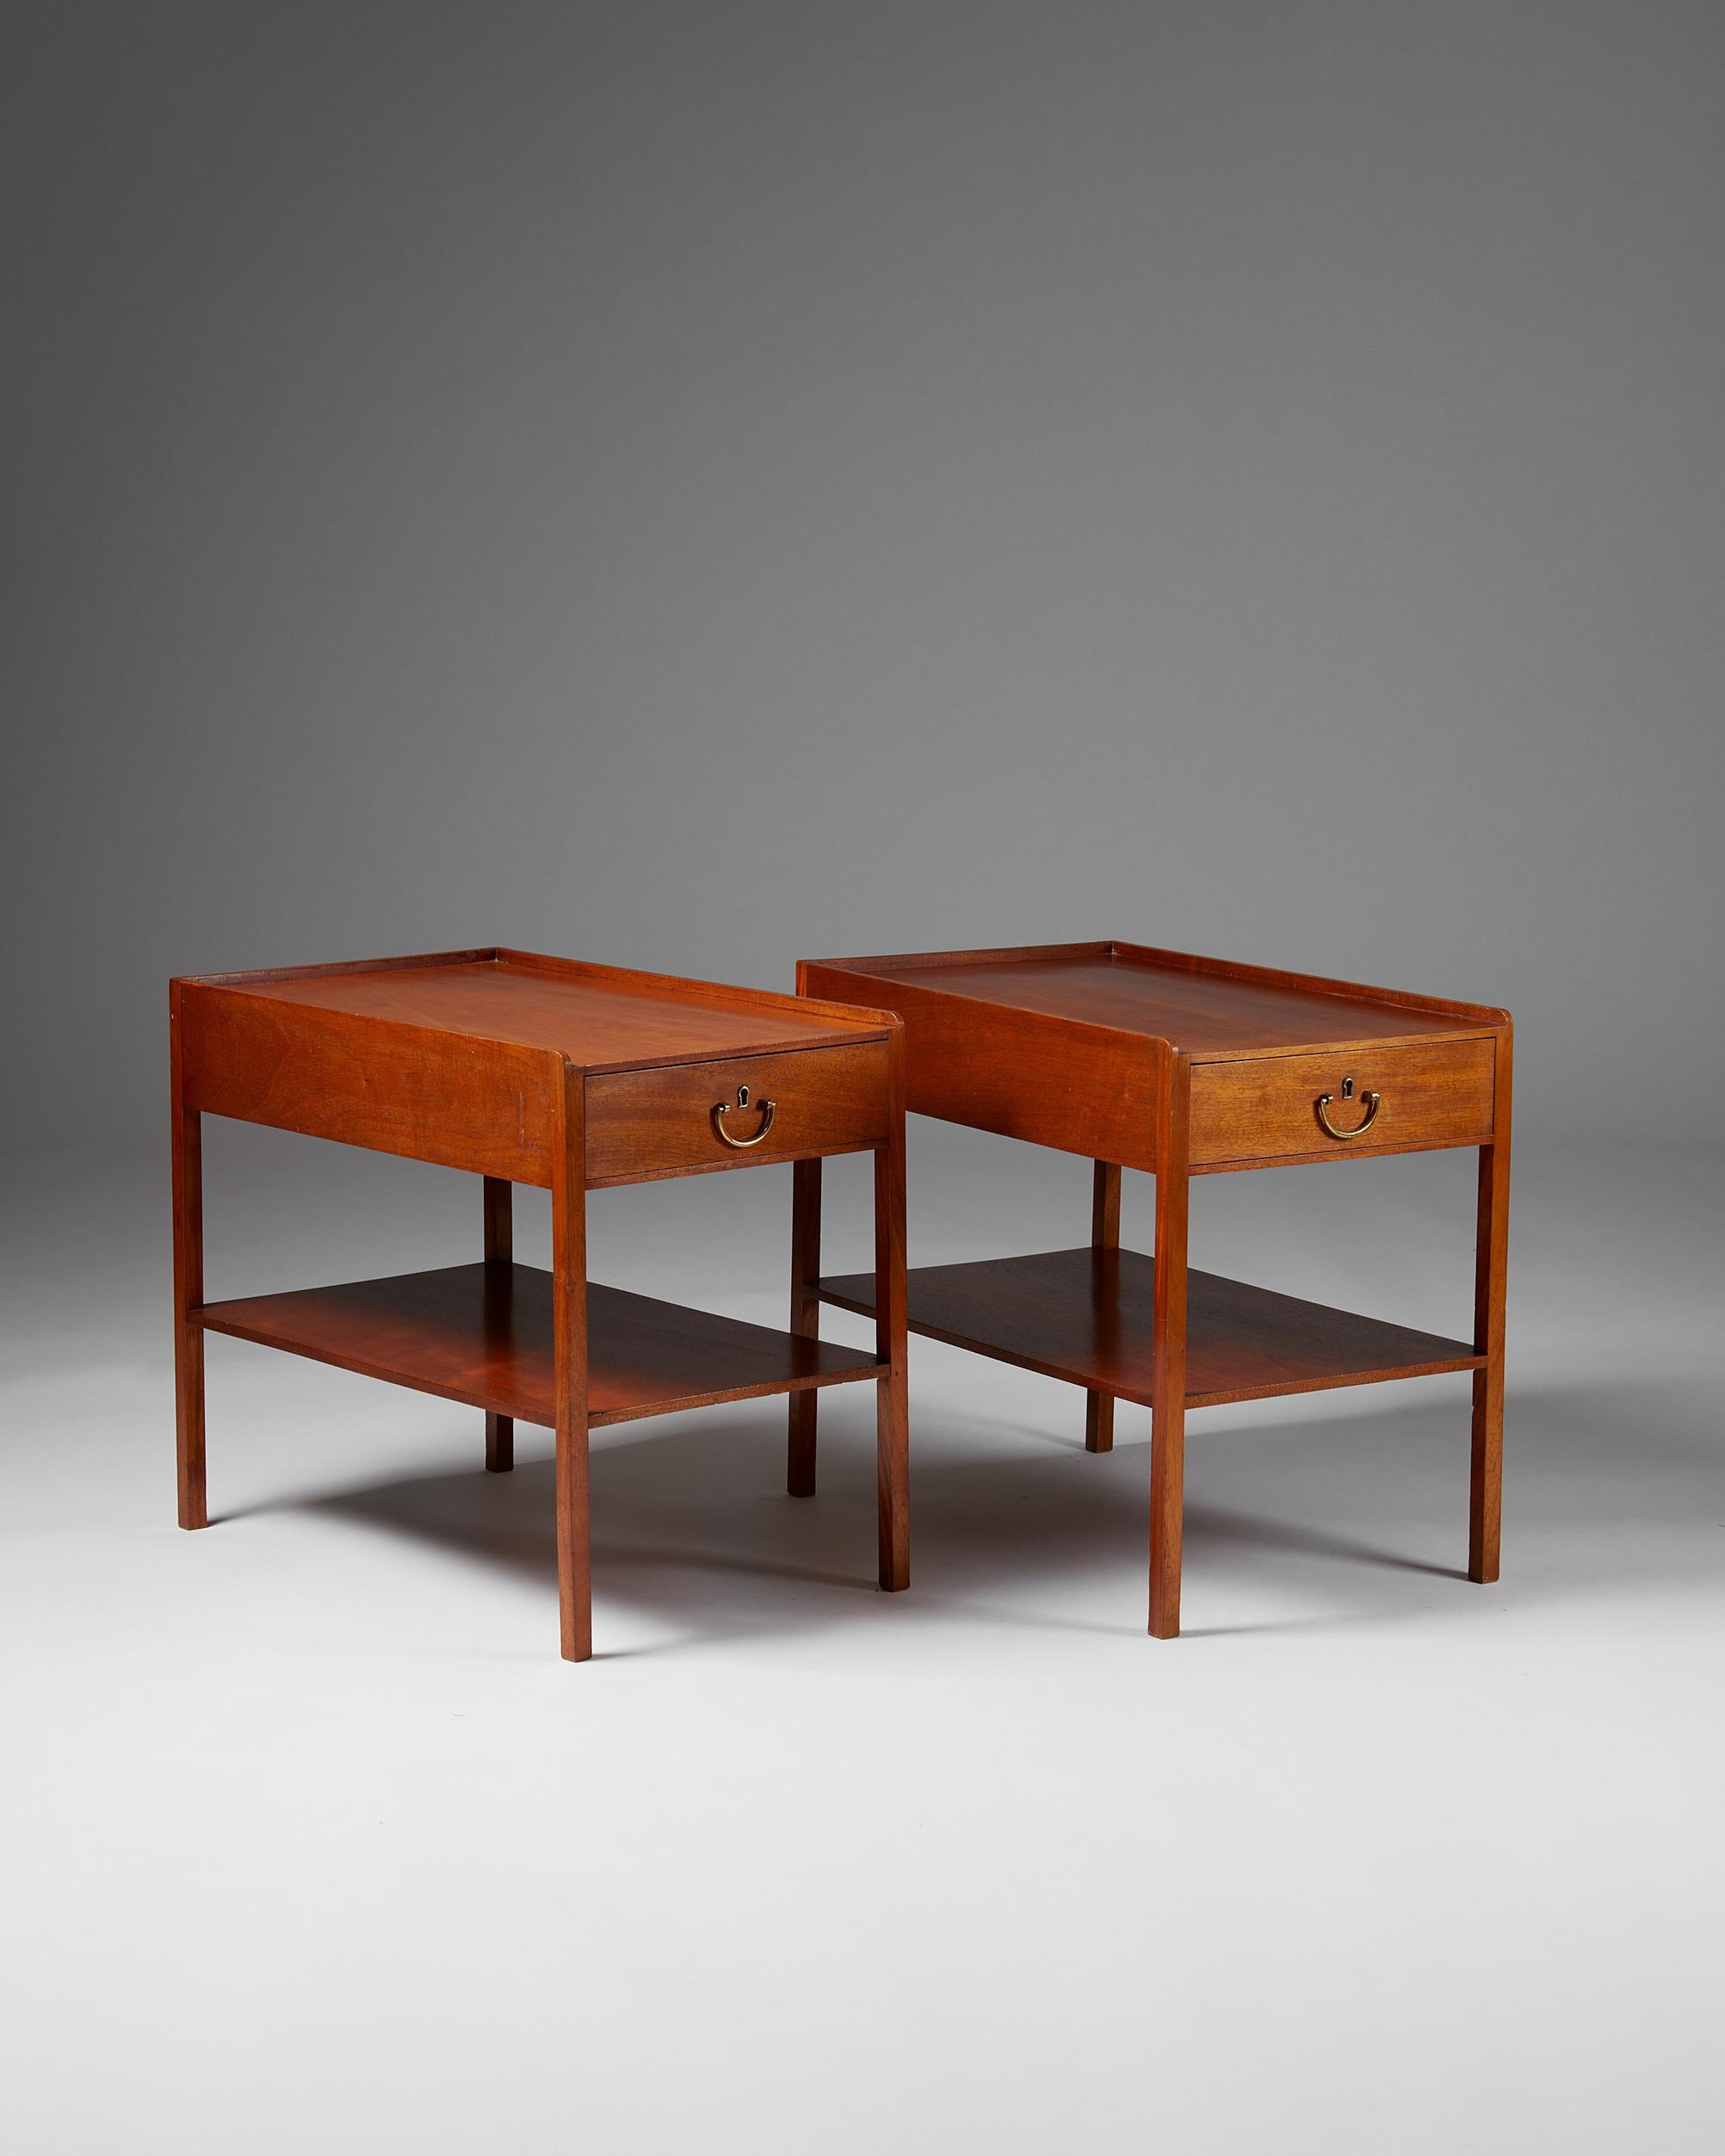 Mid-Century Modern Pair of Bedside Tables Model 914 Designed by Josef Frank for Svenskt Tenn